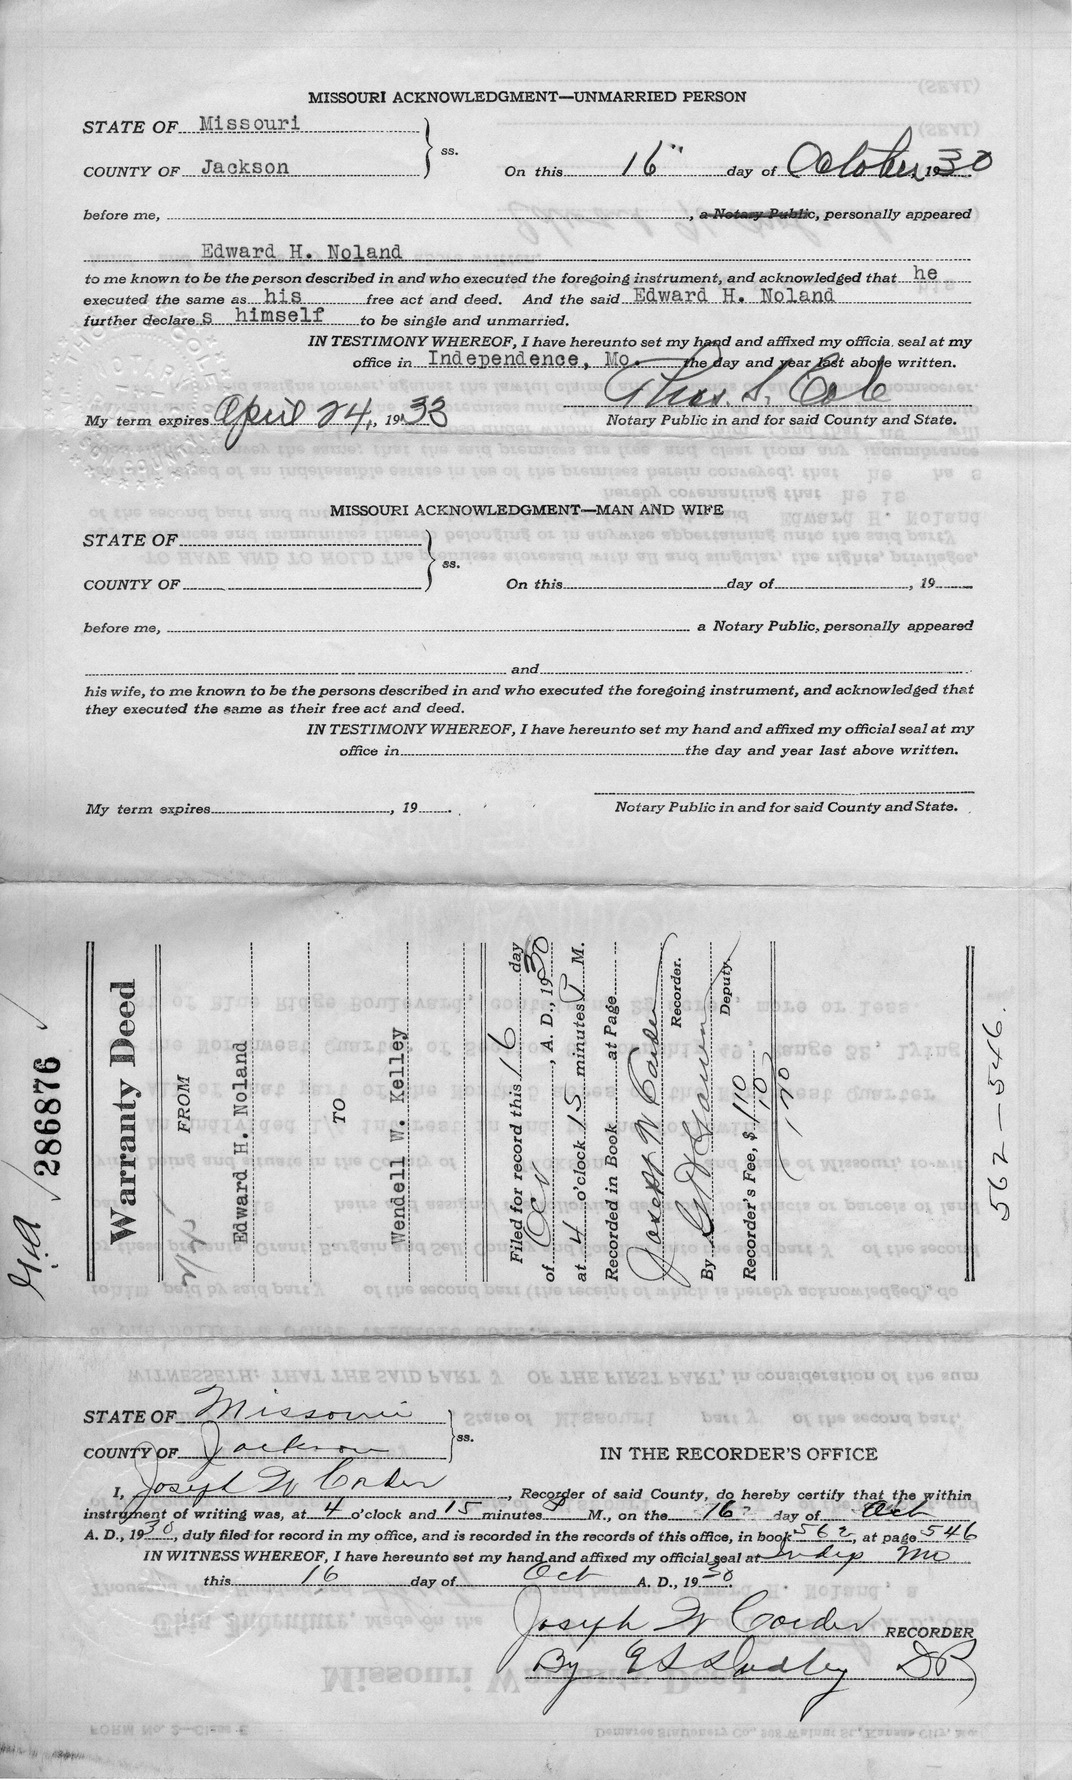 Warranty Deed from Edward H. Noland to Wendell W. Kelley